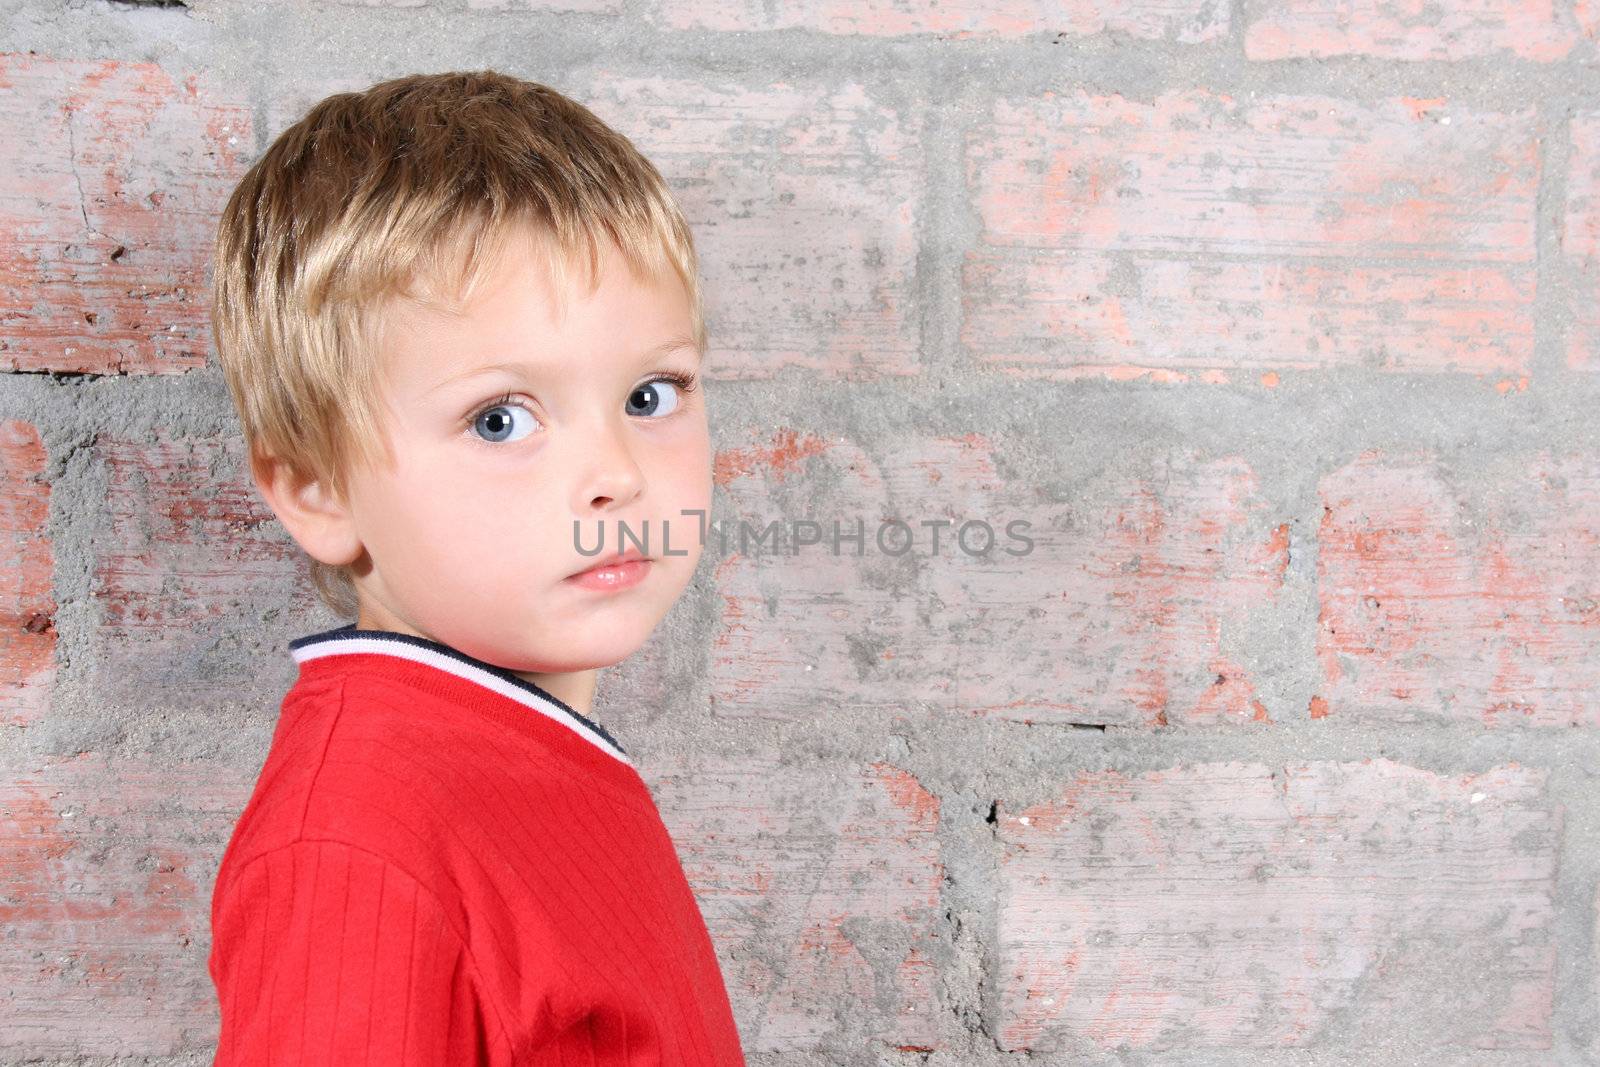 Cute toddler boy against a brick wall background